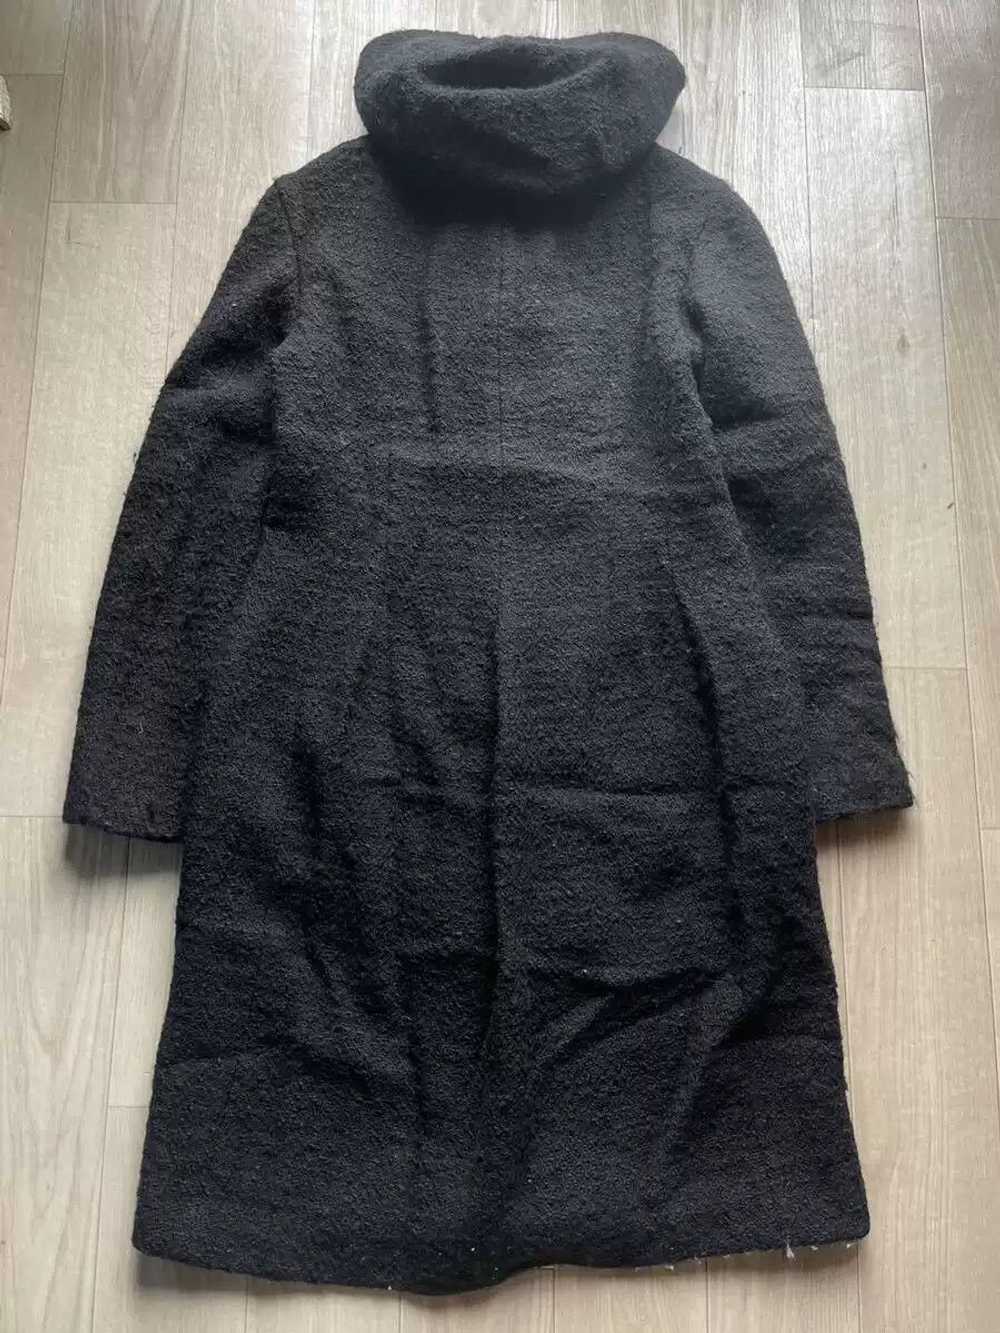 Yohji Yamamoto Yohji Yamamoto 05ss Fur Coat - image 3